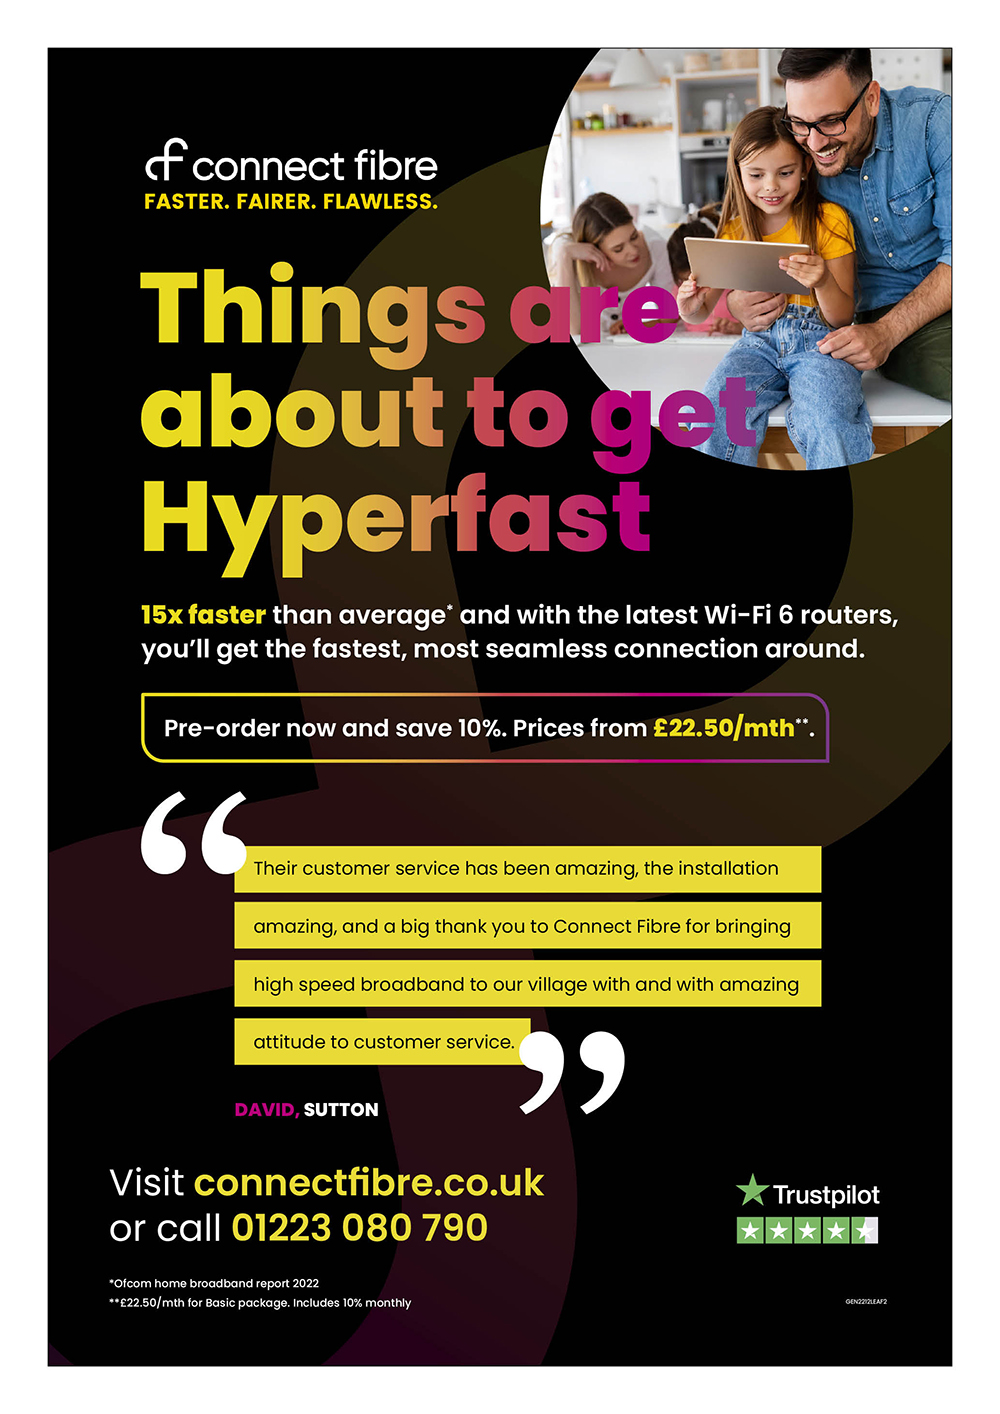 Image of Connect Fibre advert